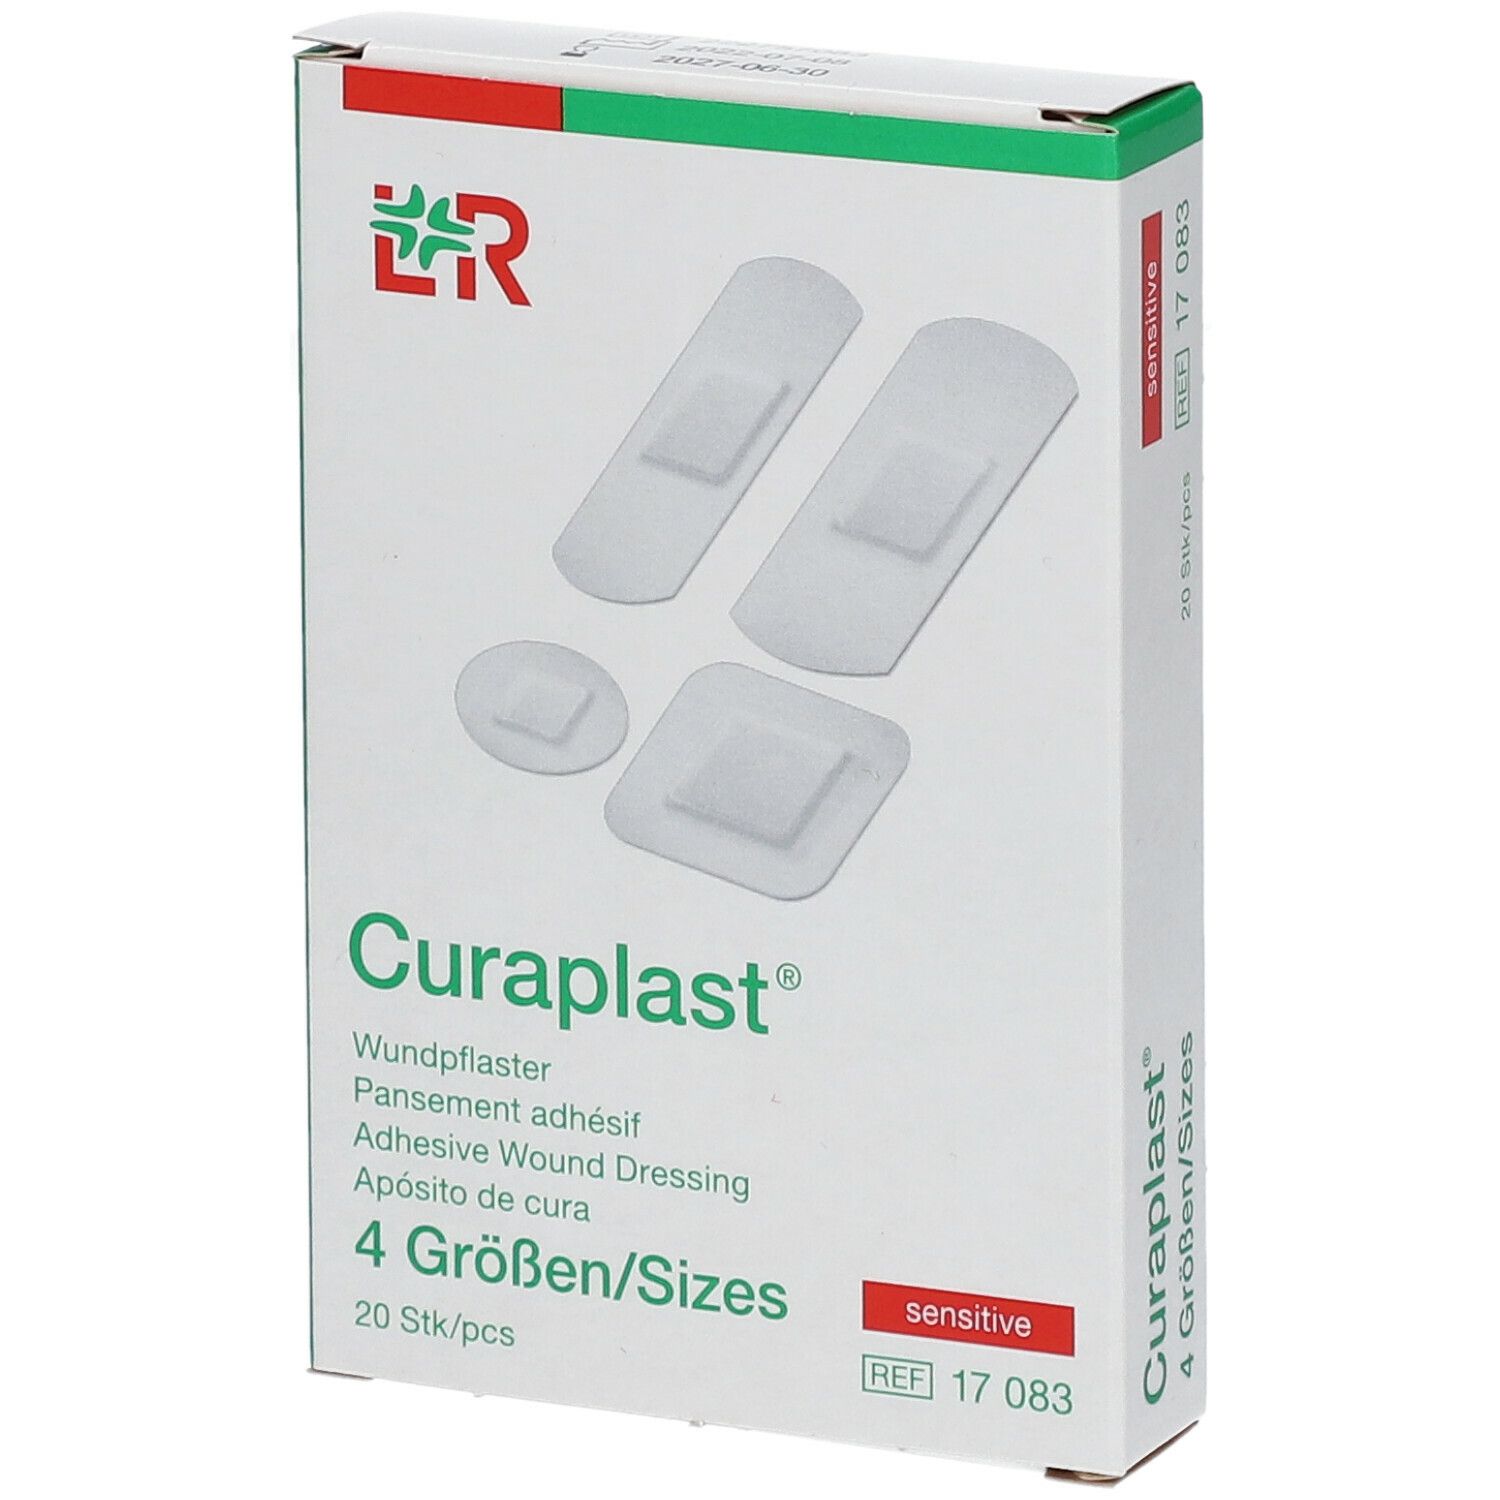 Curaplast® sensitiv strips